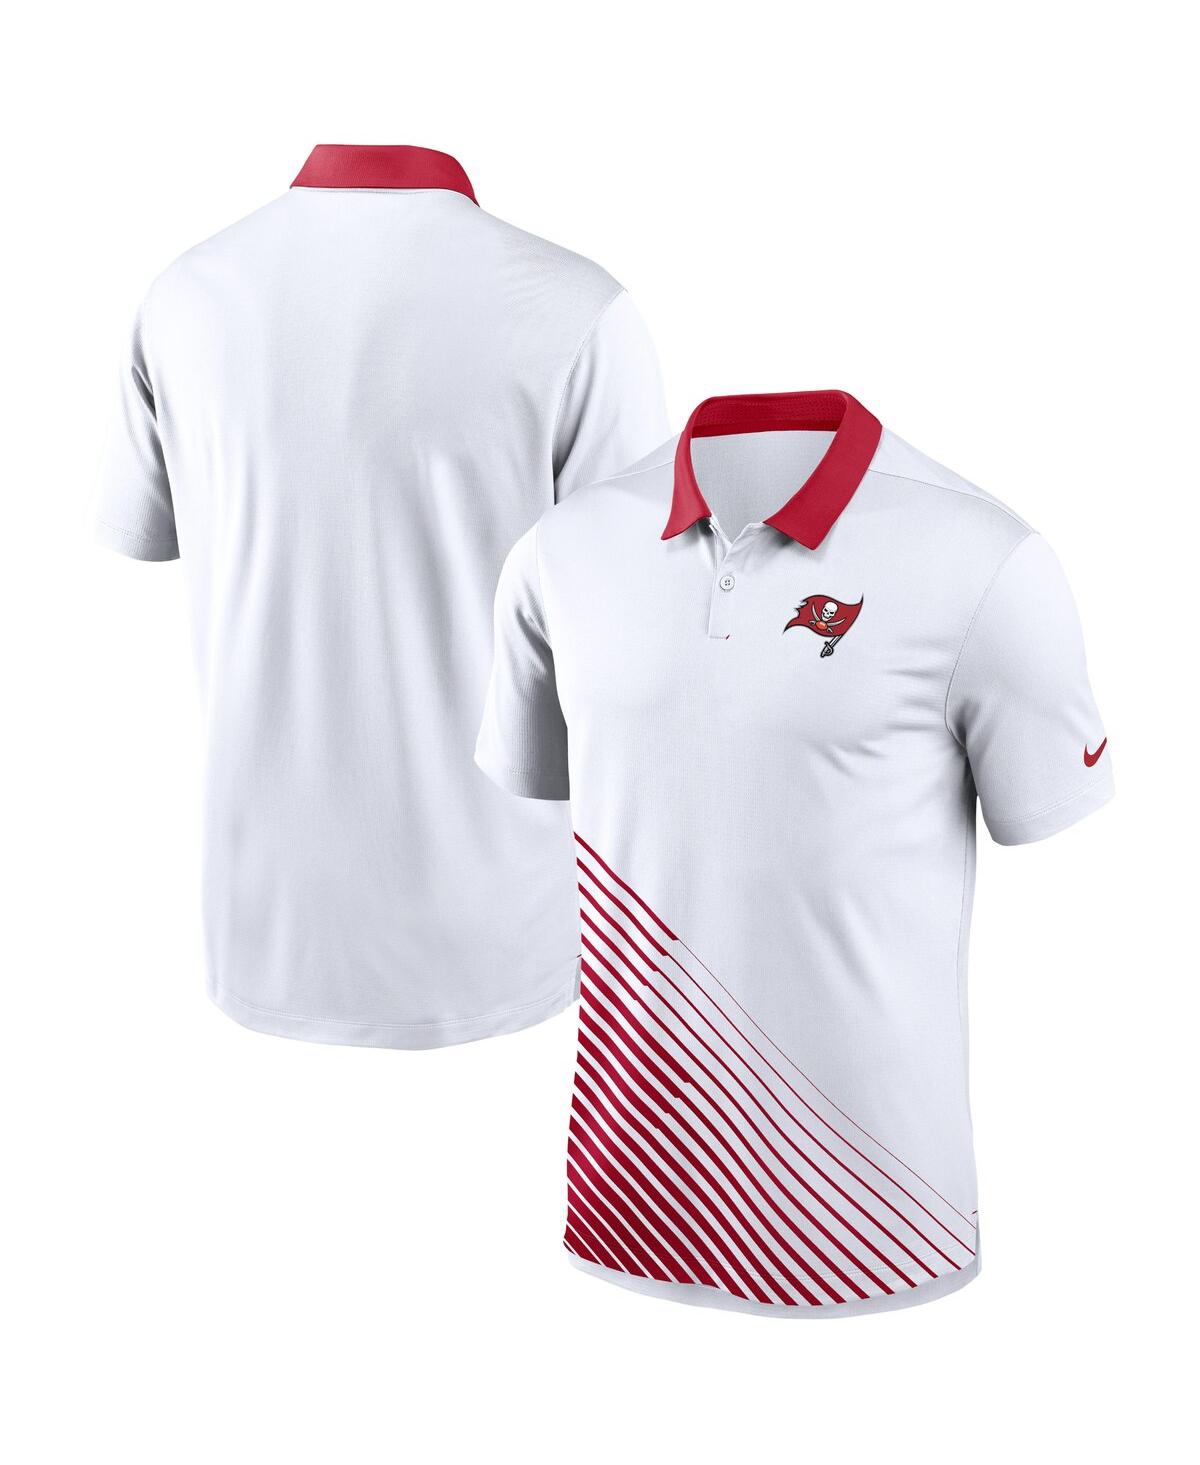 Men's Nike White Tampa Bay Buccaneers Vapor Performance Polo Shirt - White